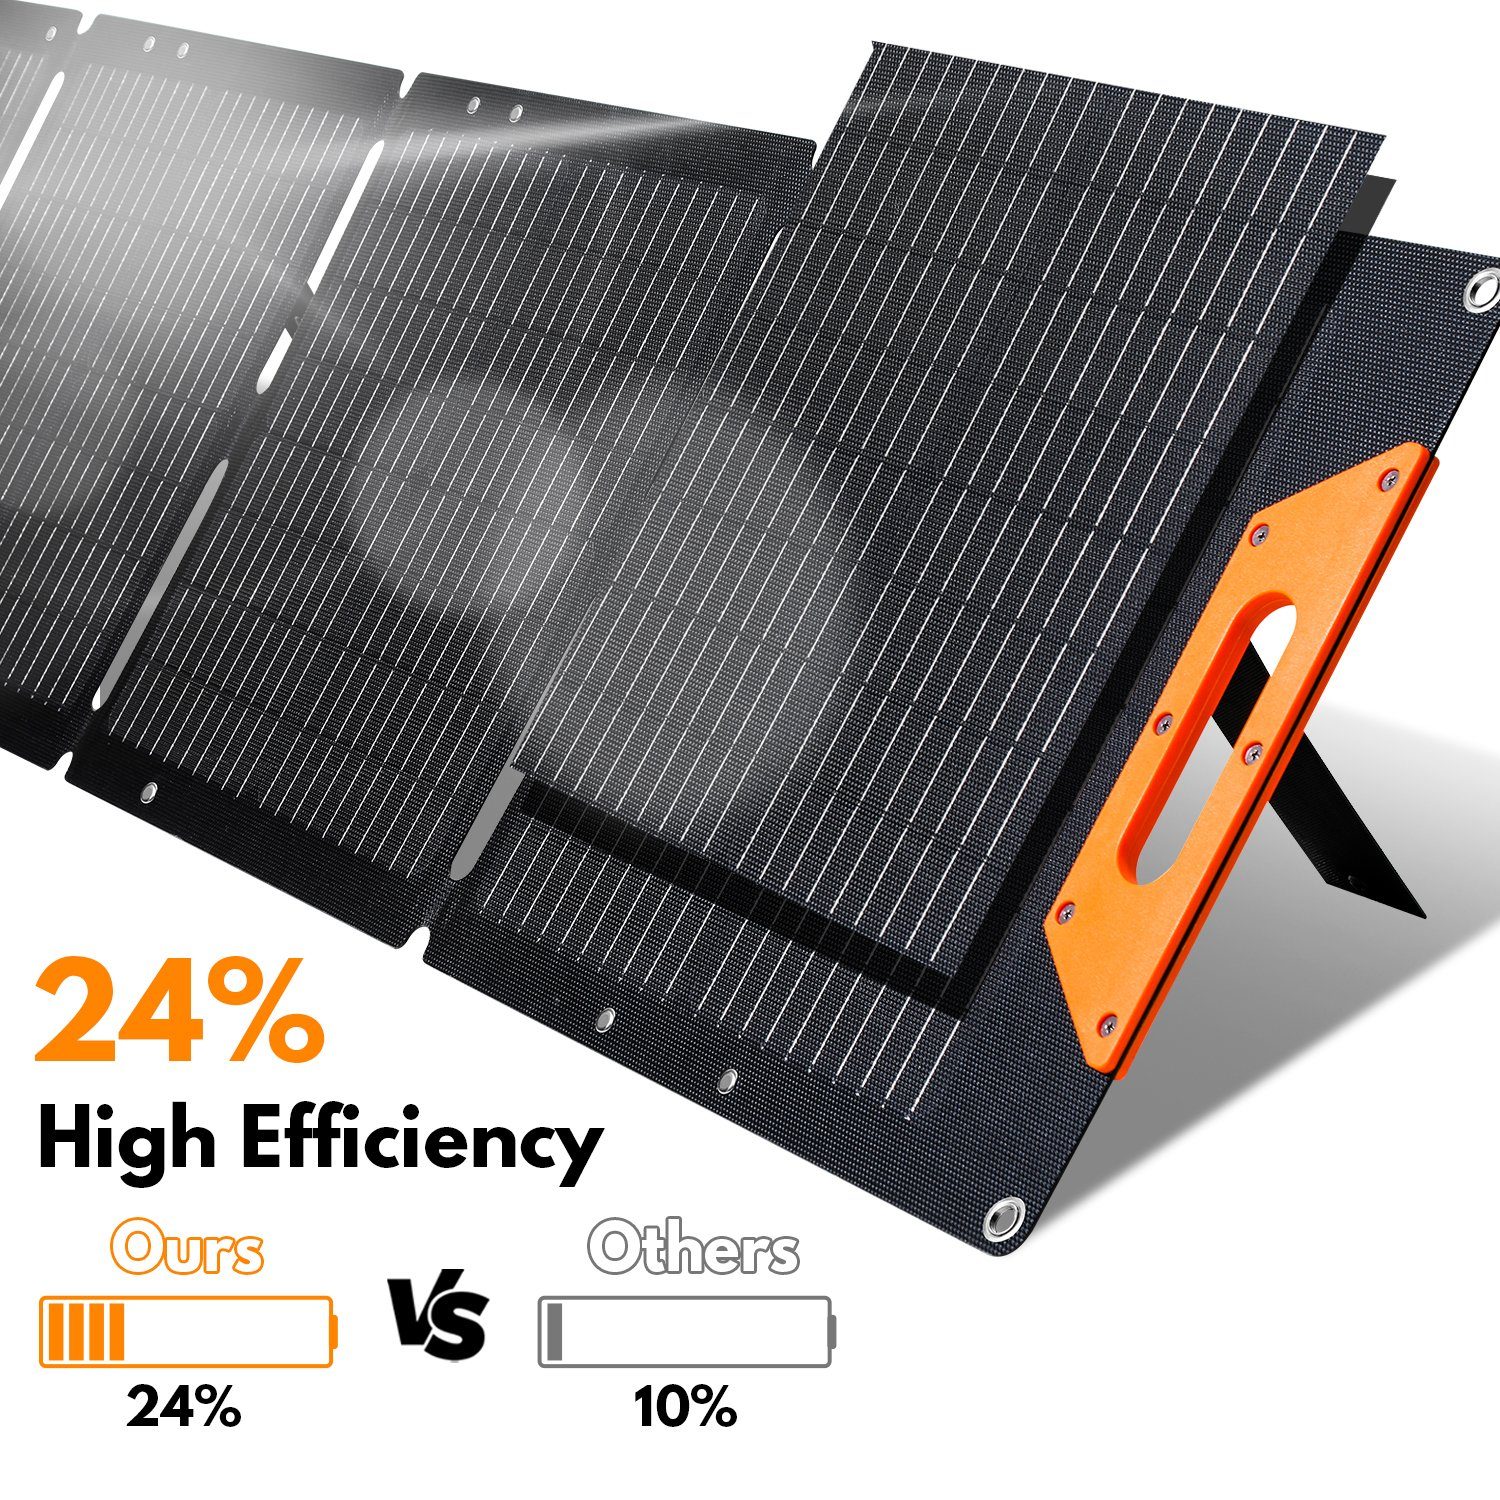 Lospitch Faltbares tragbares Solarpanel W Solarmodul Power 120W 200,00 Solarzellen-Ladegerät,